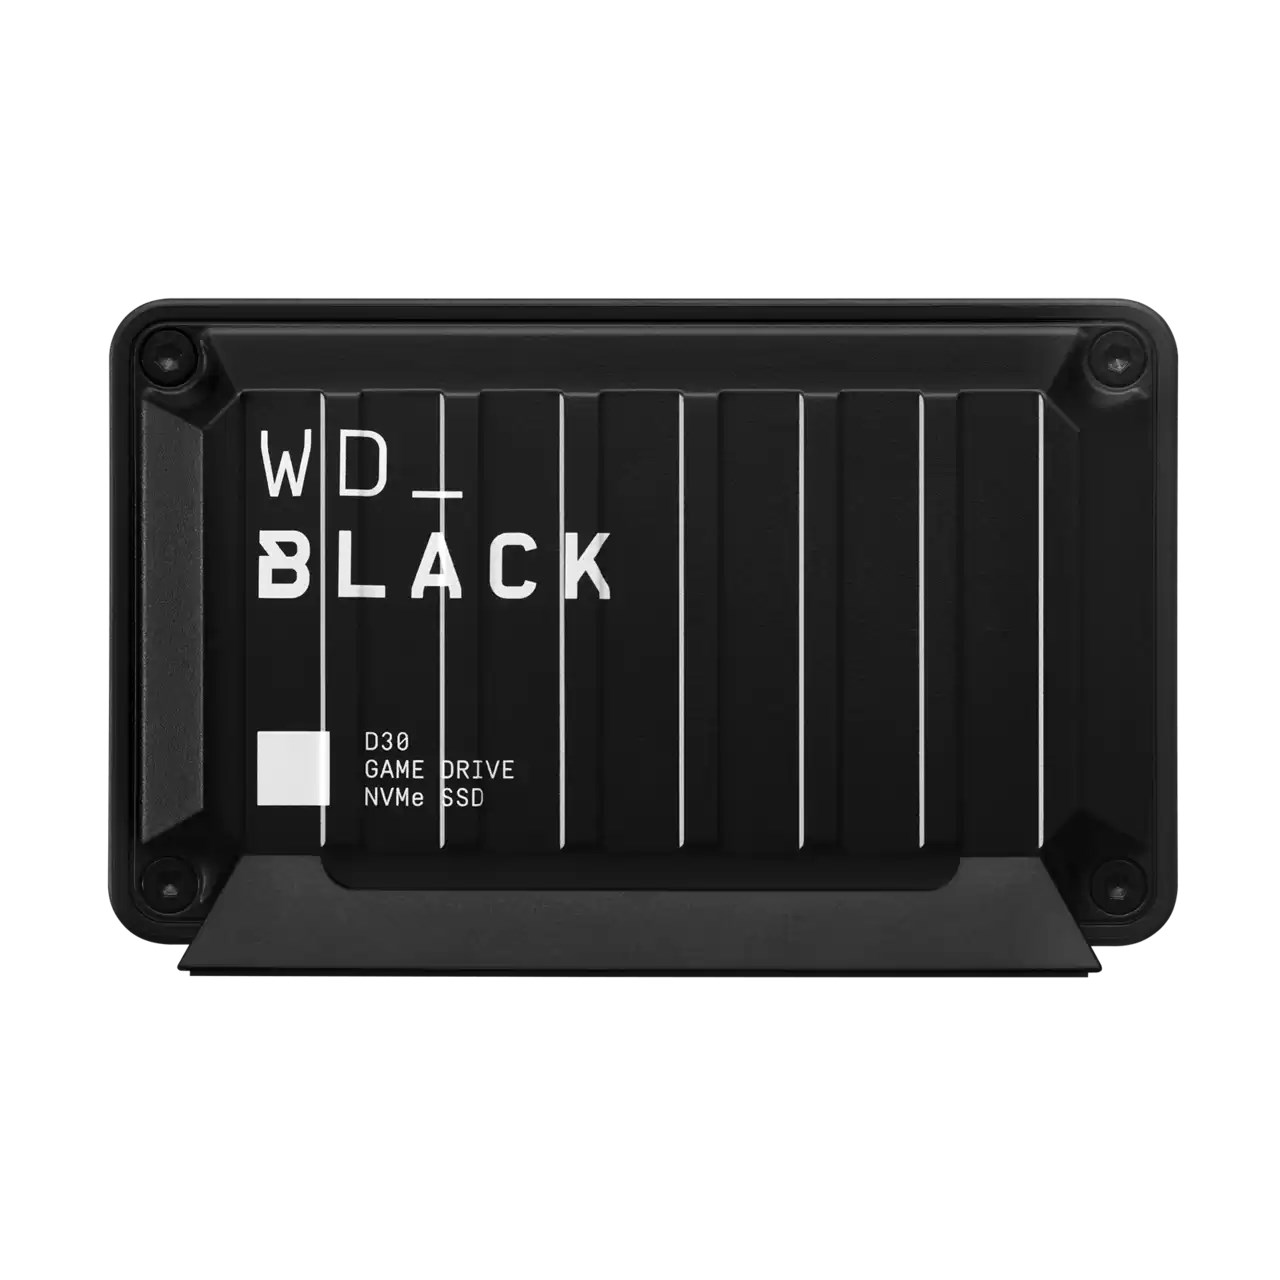 SanDisk externí SSD 2TB WD BLACK D30 Game Drive0 